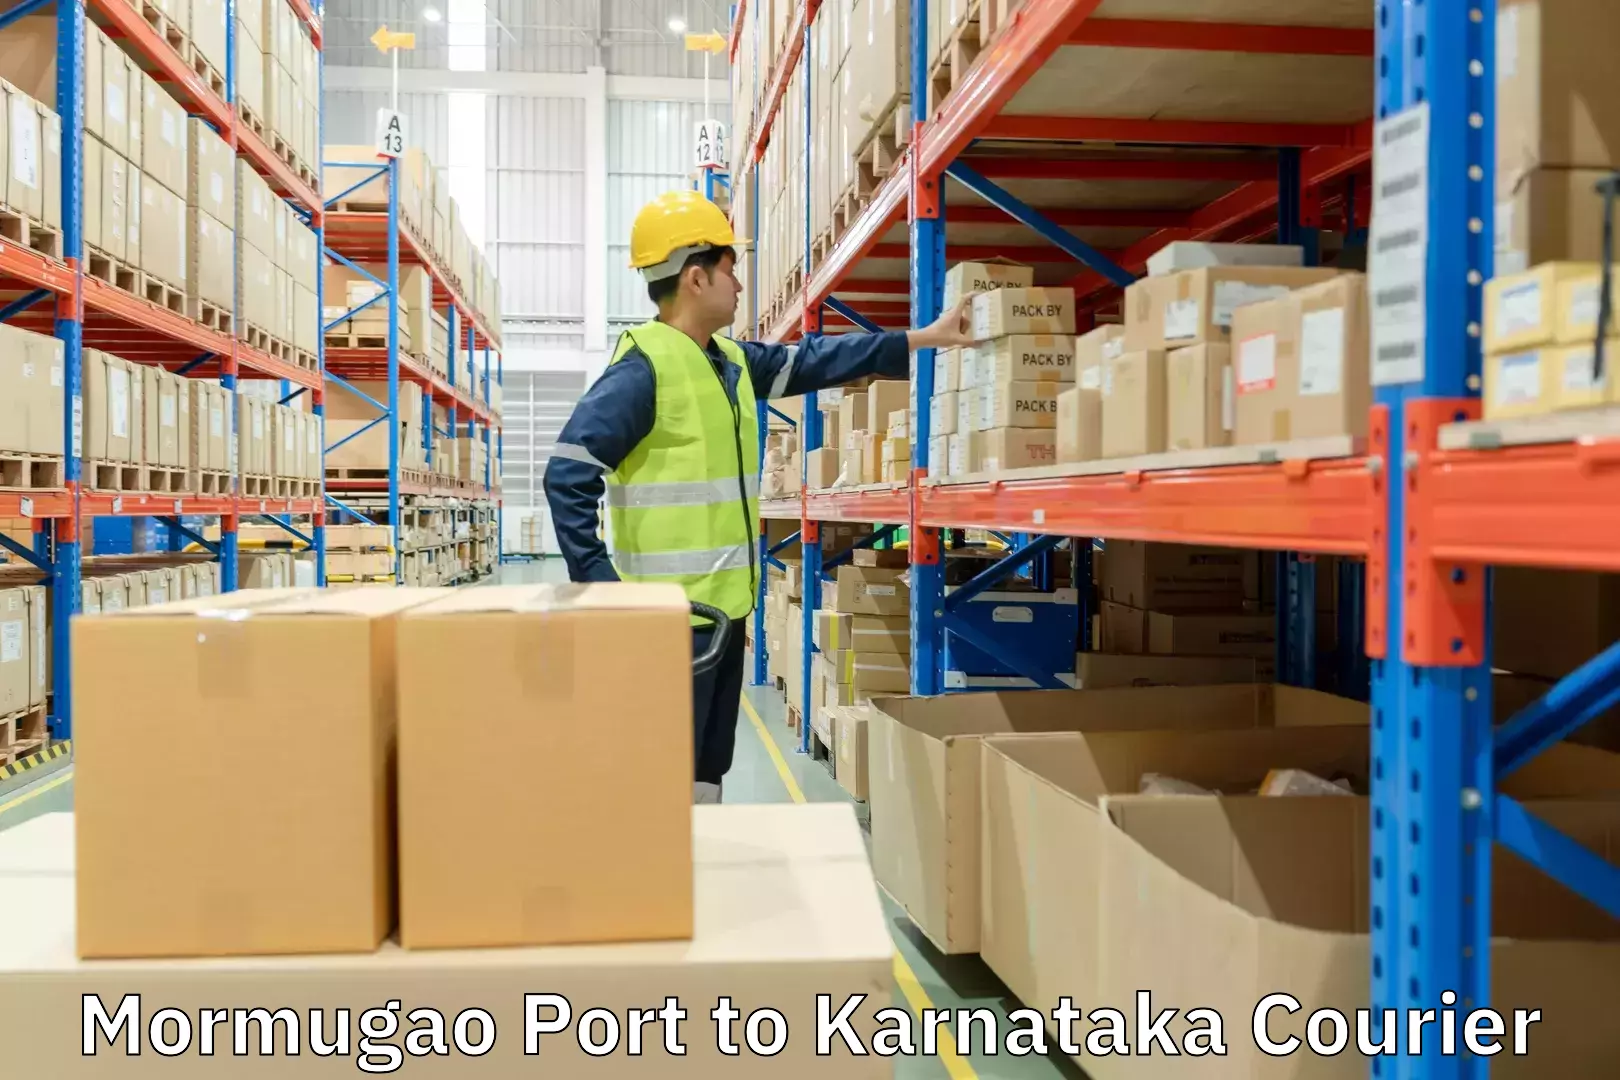 Online package tracking Mormugao Port to Karnataka